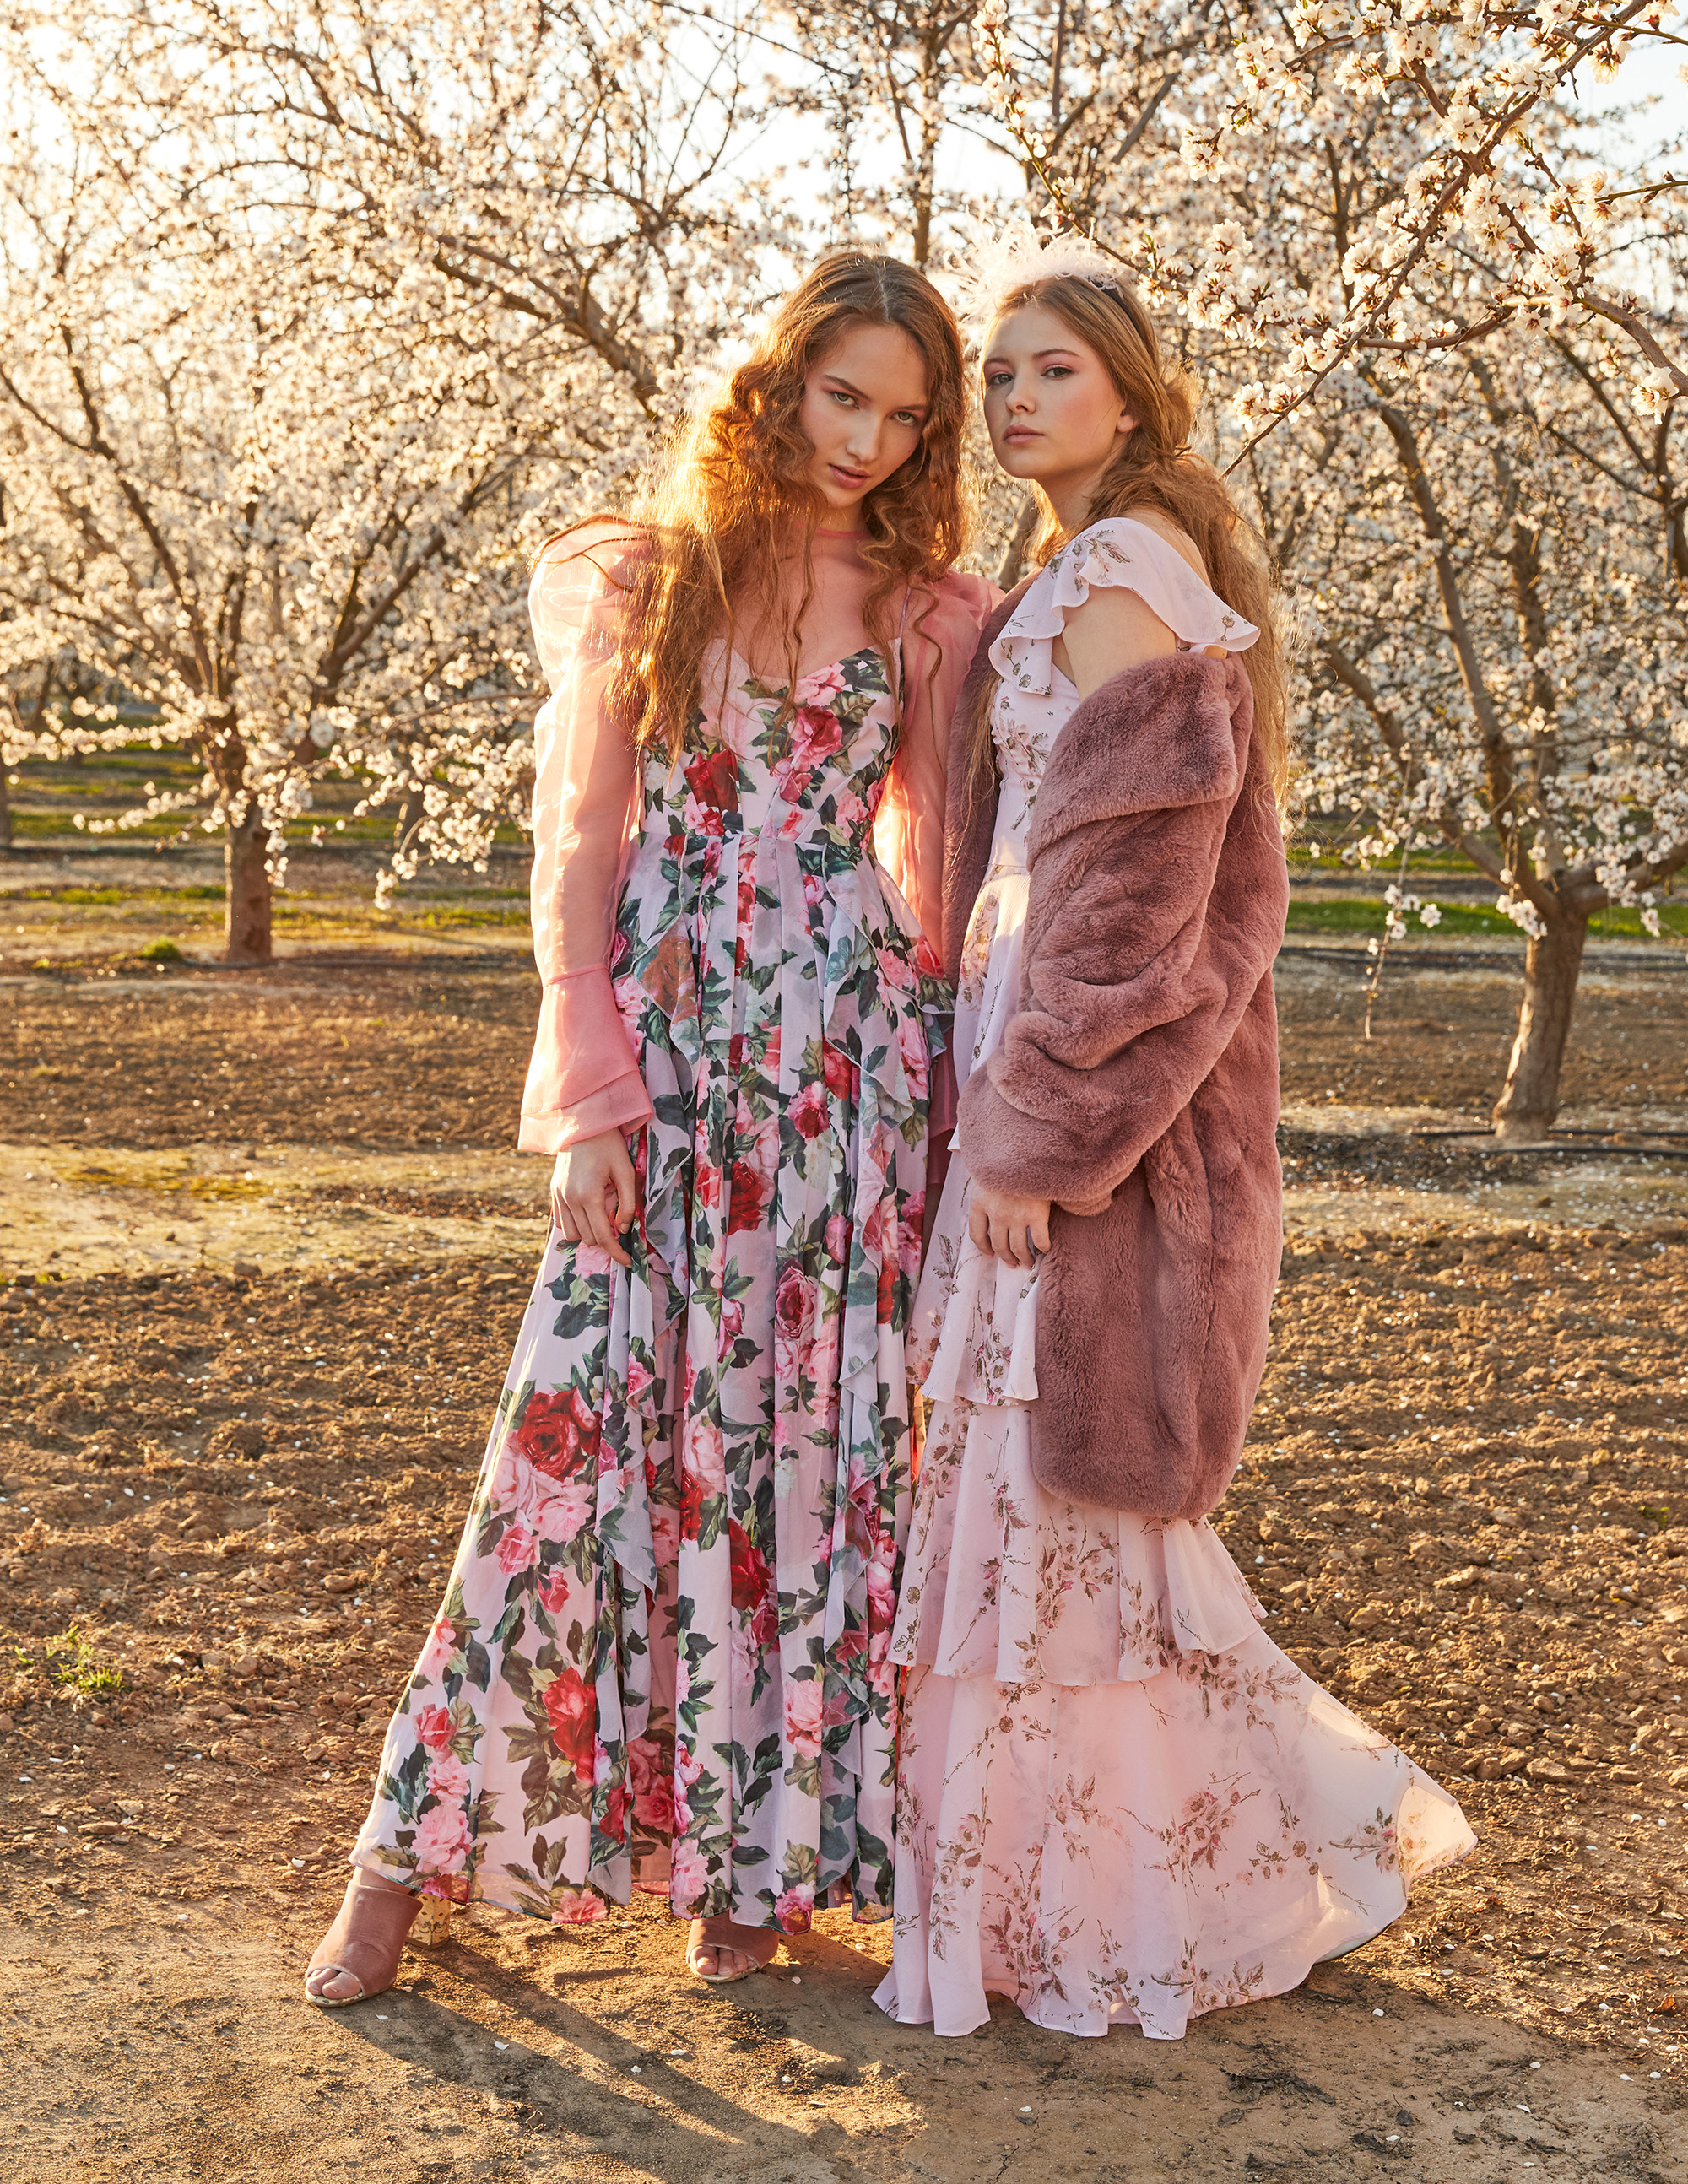 Modic Fashion Editorial - Blossom Sisters by Claudia Goetzelmann